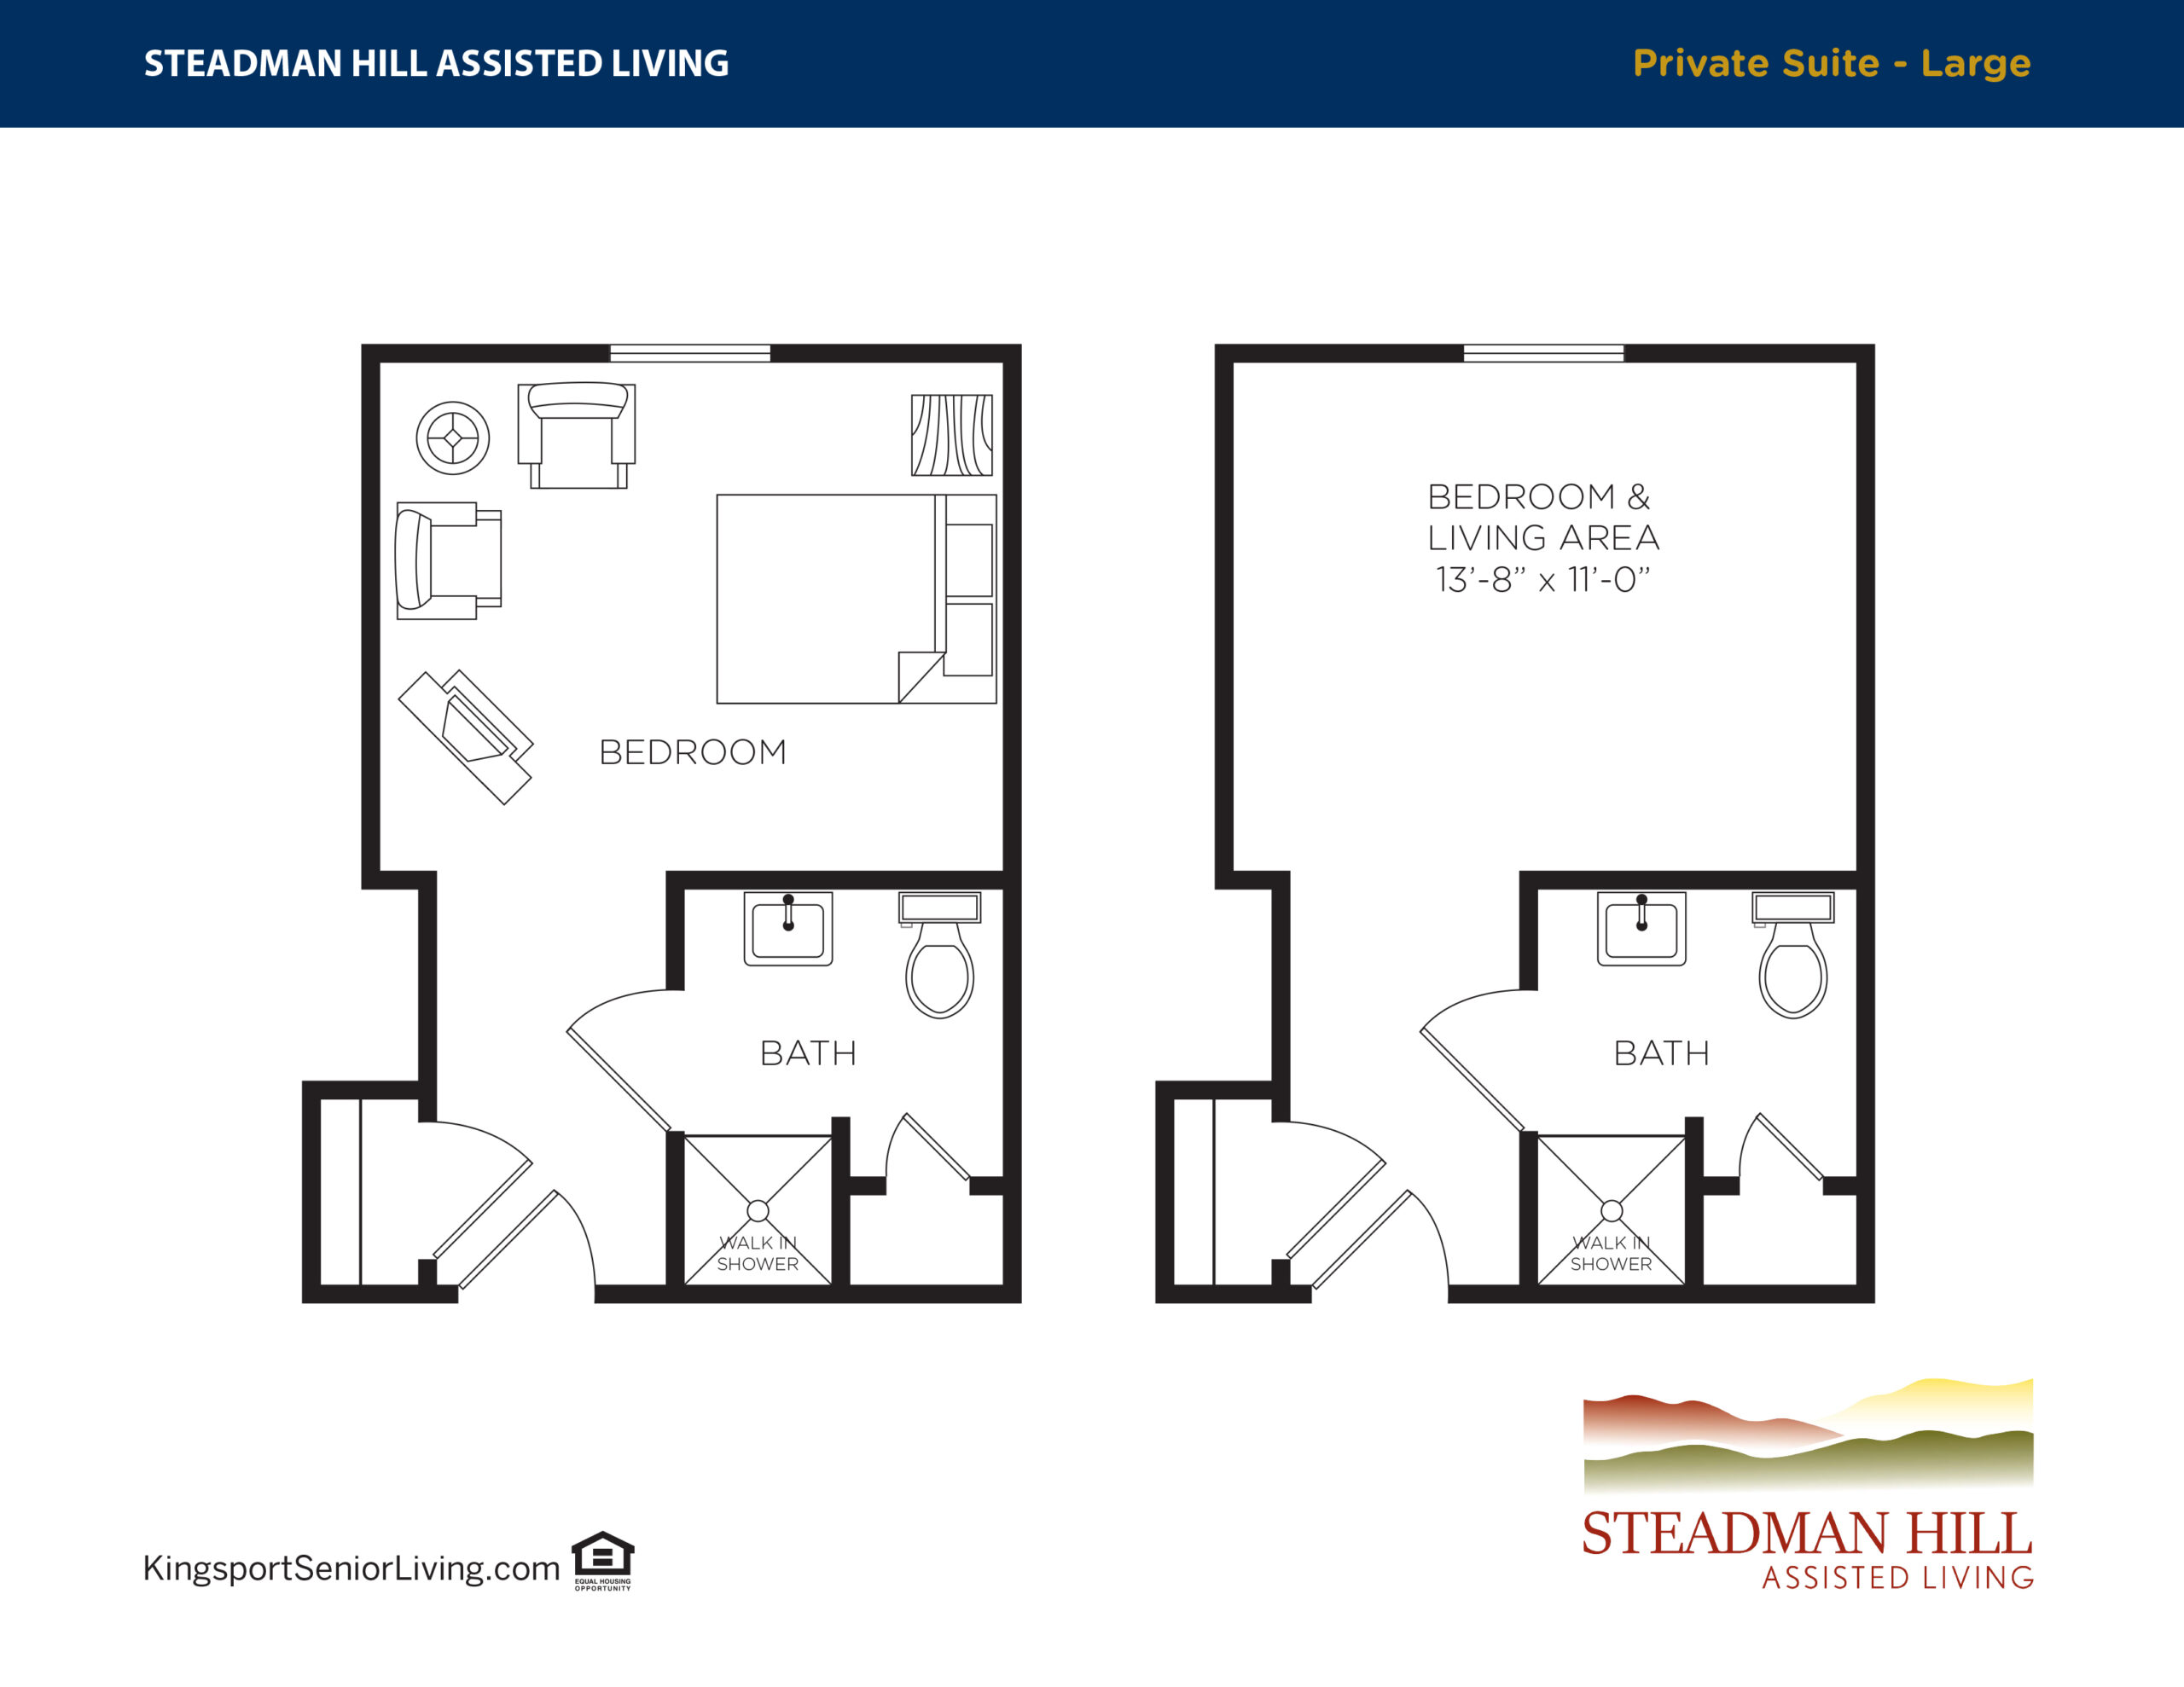 Steadman Hill Floorplan Private Large